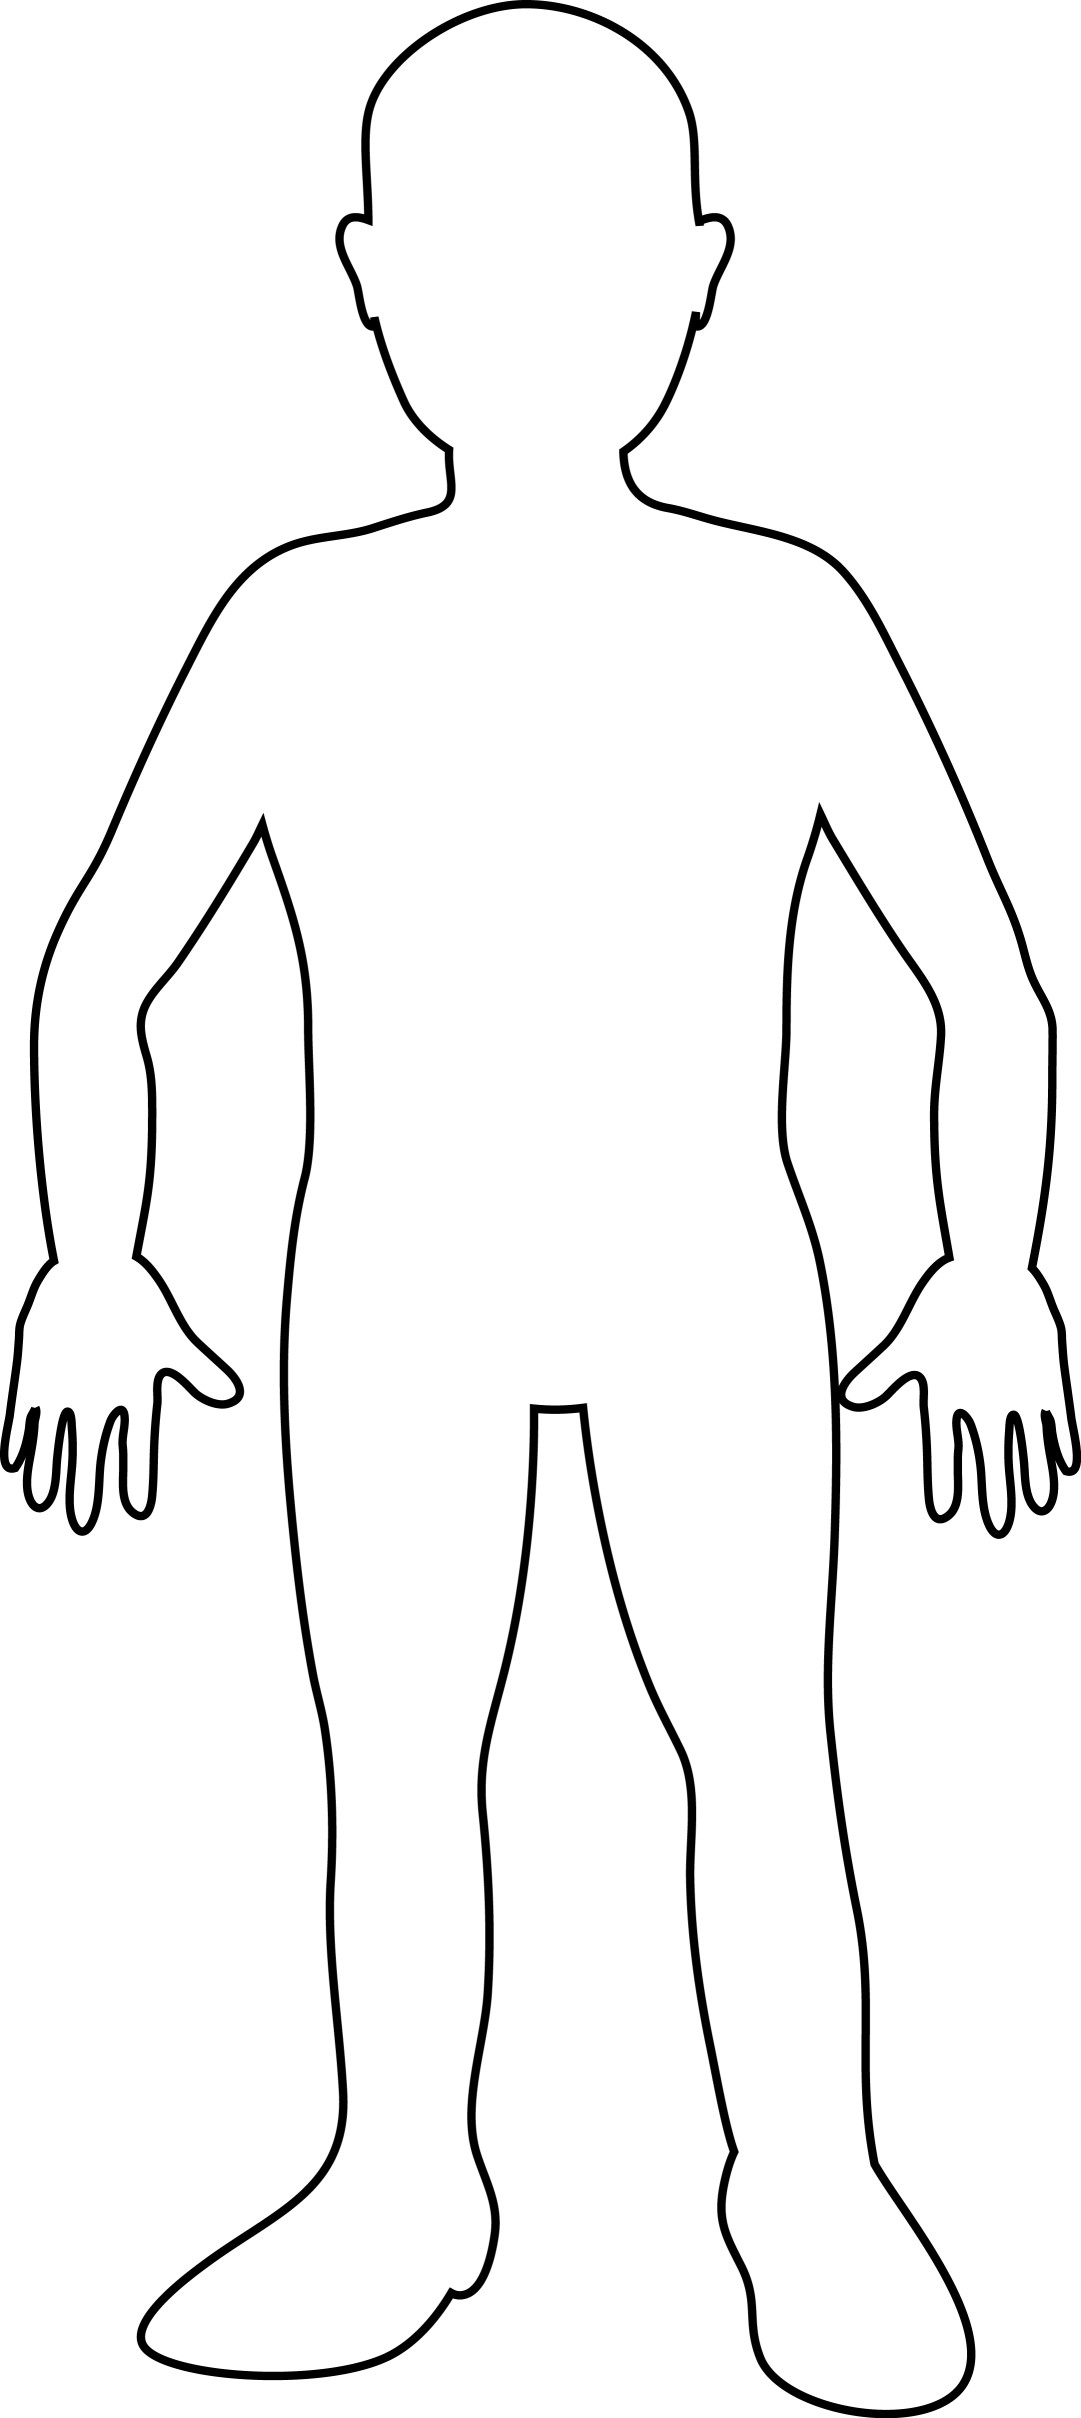 human body cartoon drawing - Clip Art Library